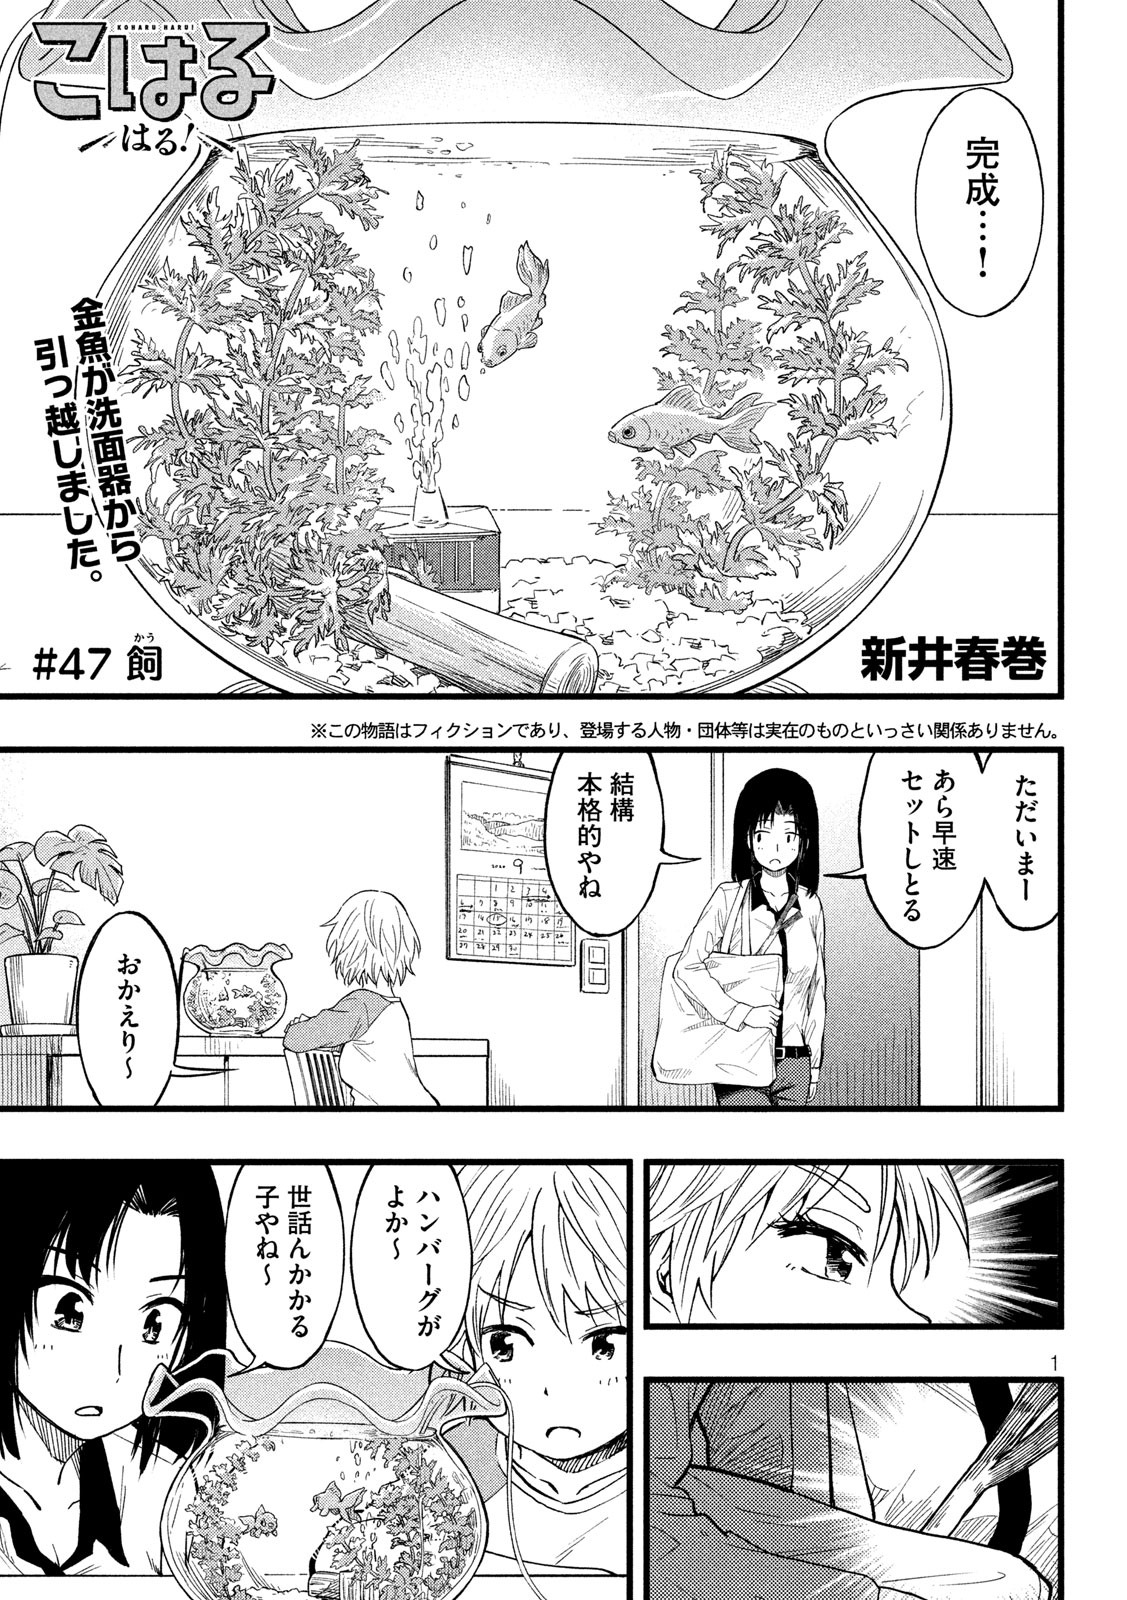 Koharu haru! - Chapter 47 - Page 1